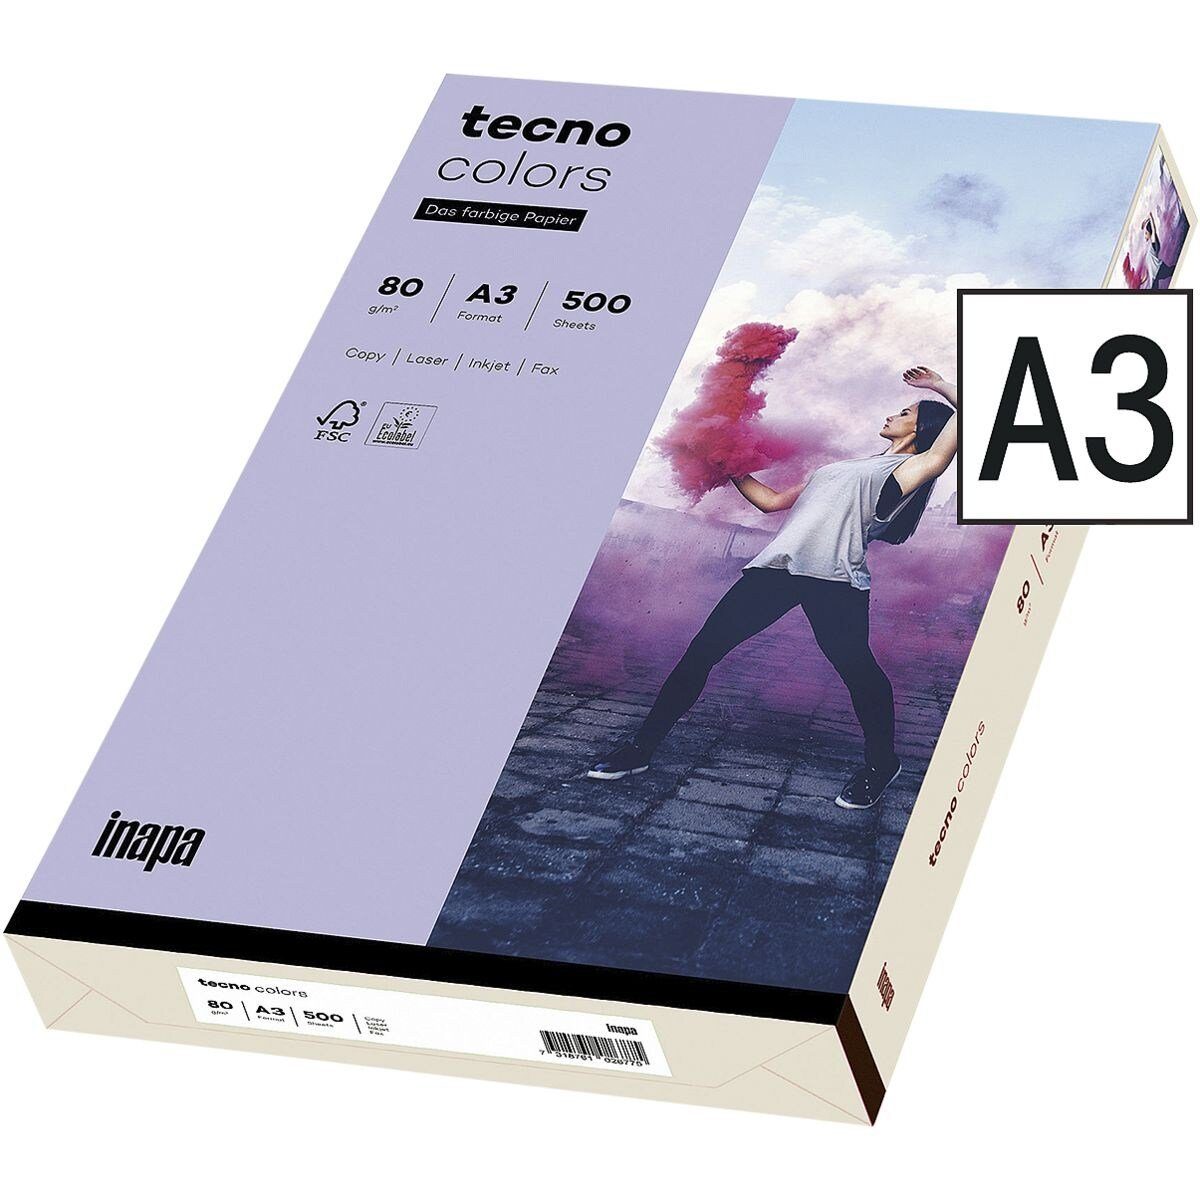 80 tecno Format tecno violett Drucker- g/m², Inapa Colors, 500 / Kopierpapier DIN und Rainbow A3, Pastellfarben, Blatt